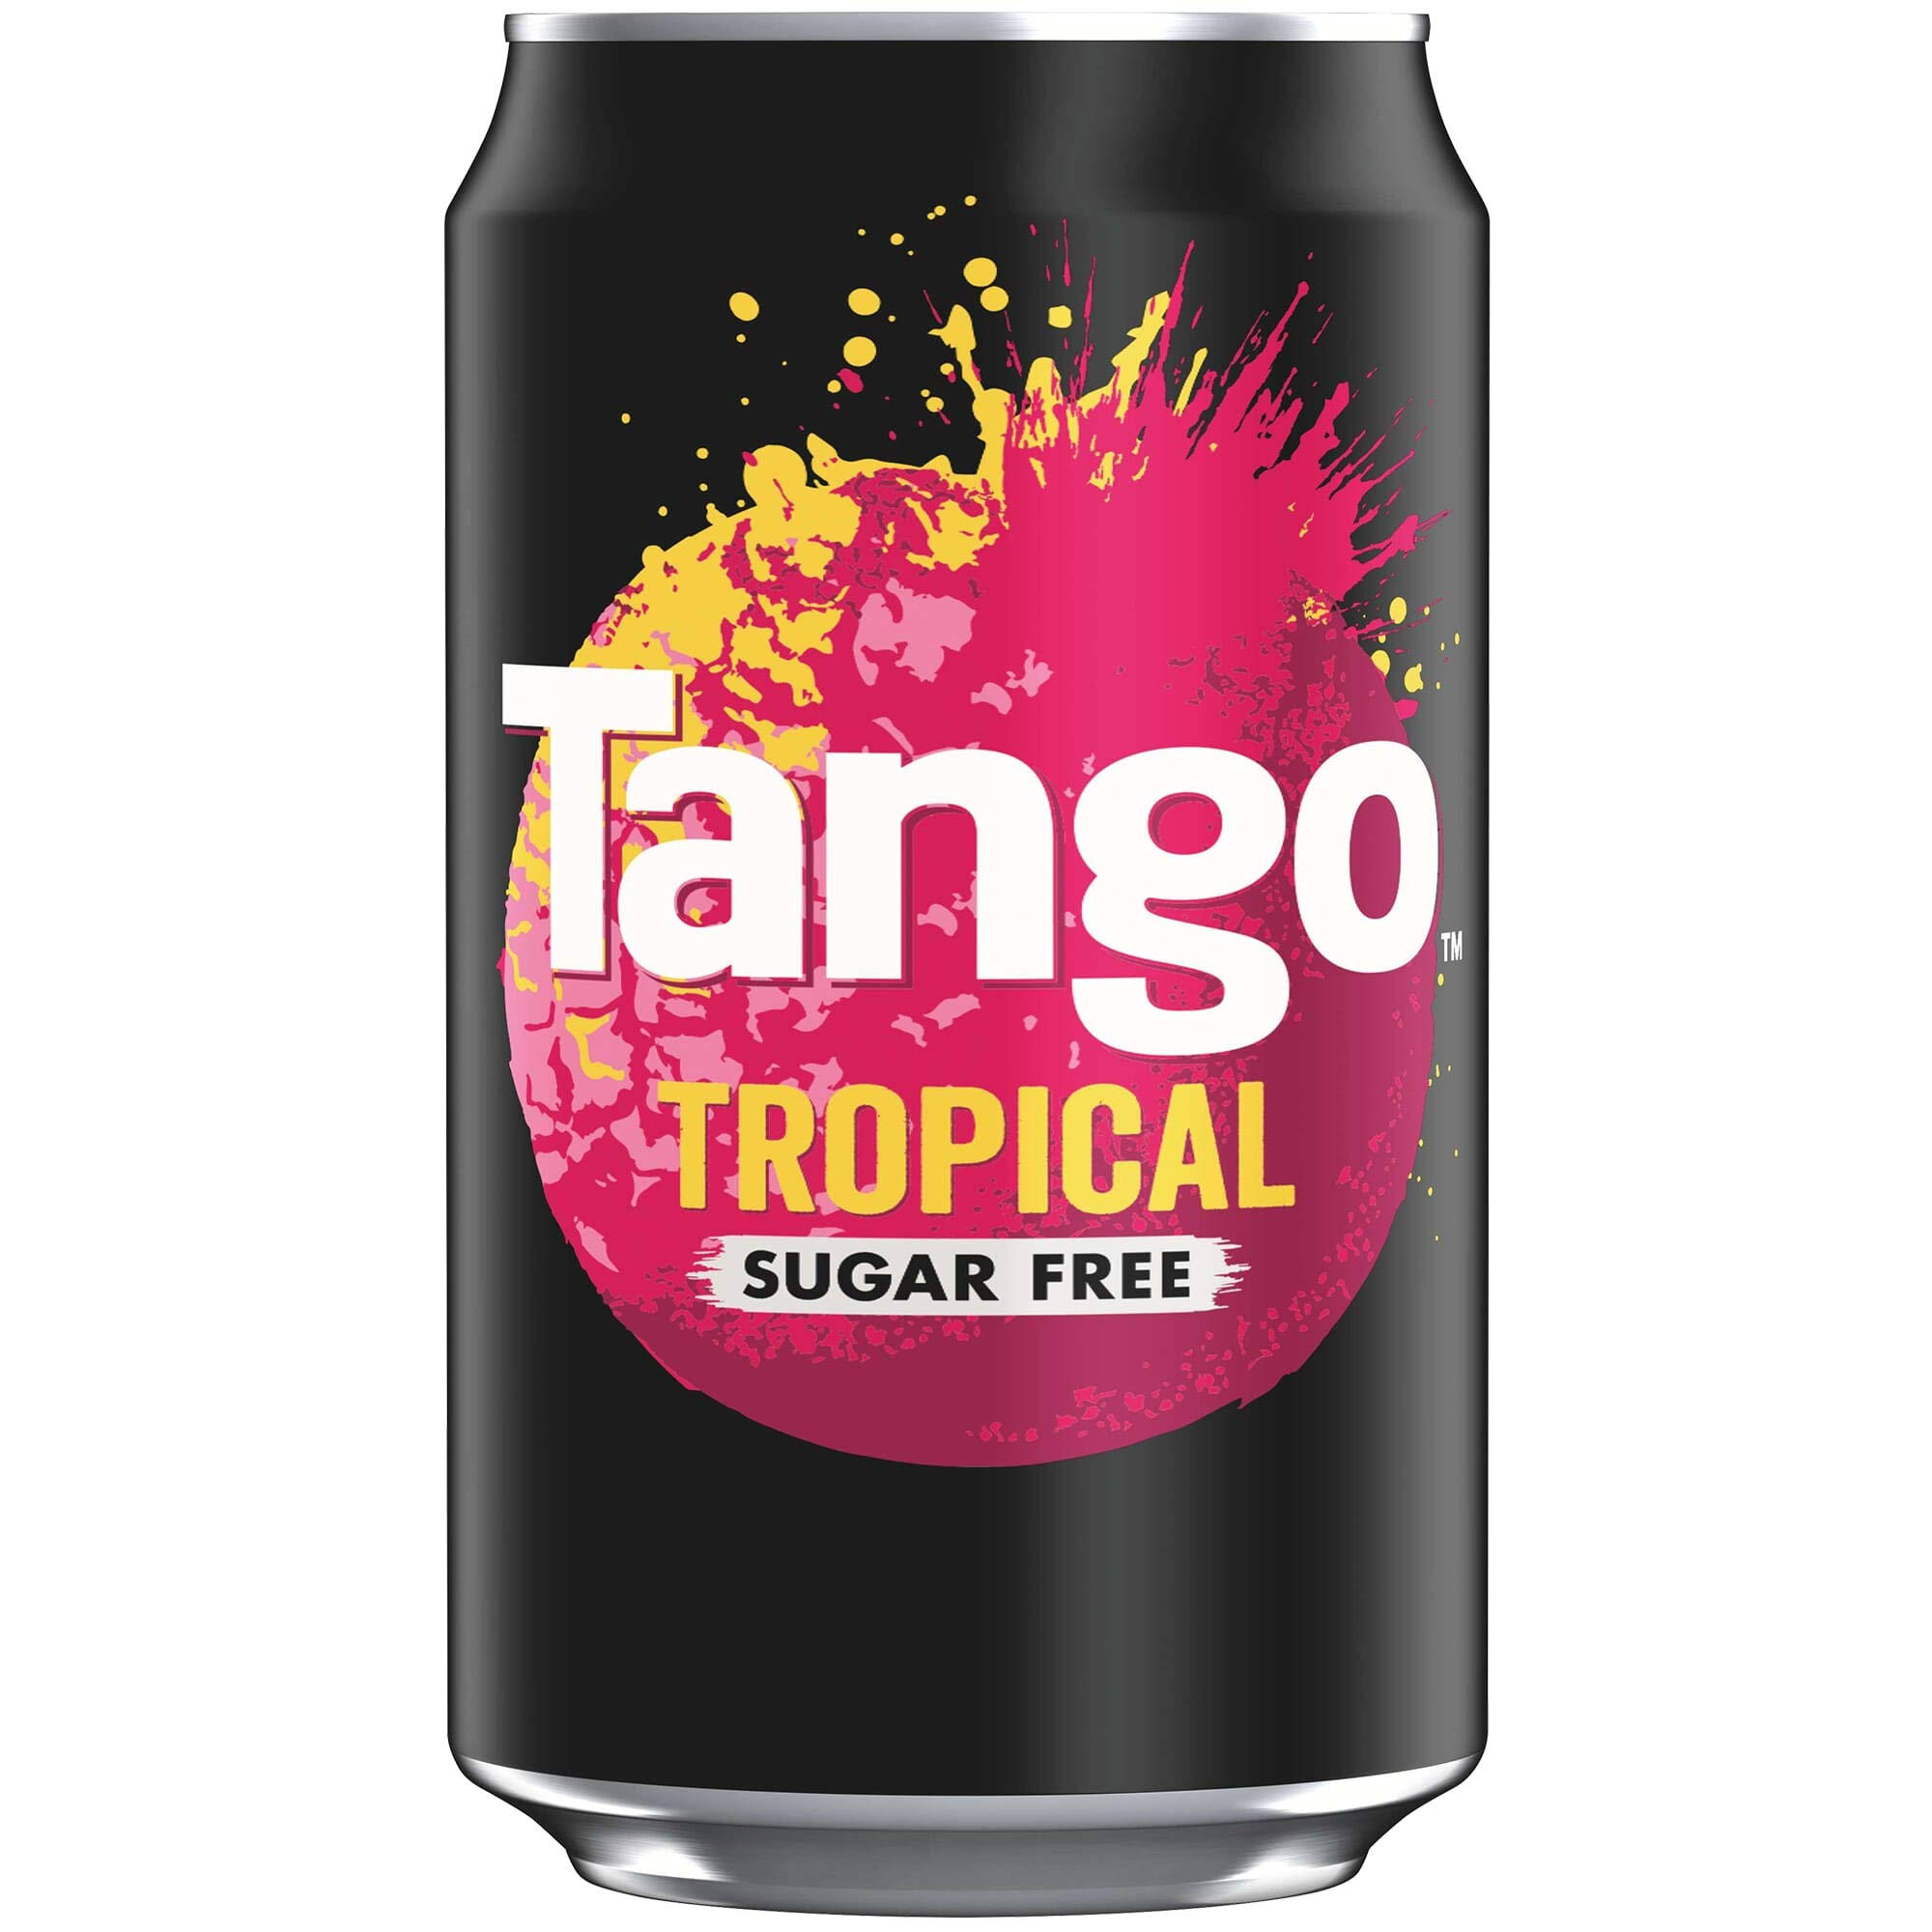 Tango Sugar Free Tropical 330ml (24 x 330ml)